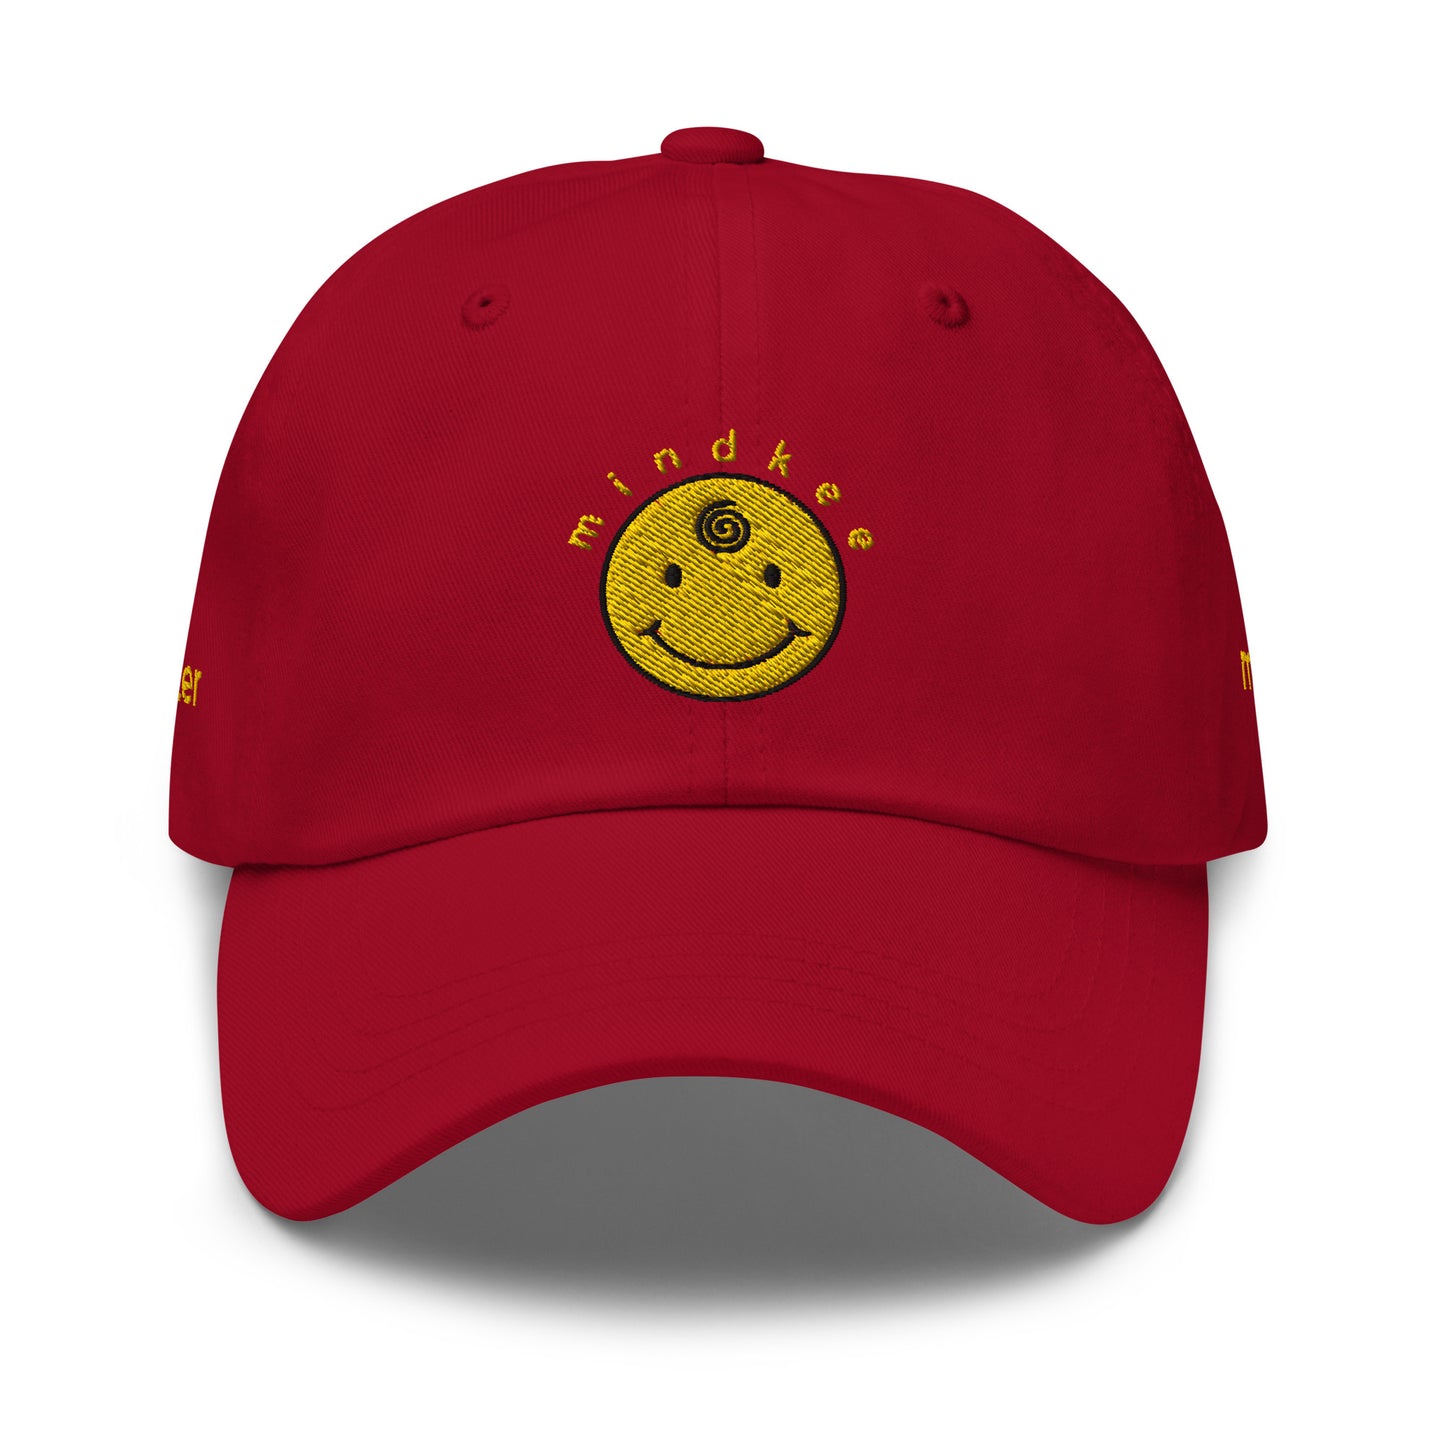 Mindkee Meditation Cap (Yellow Smiley)